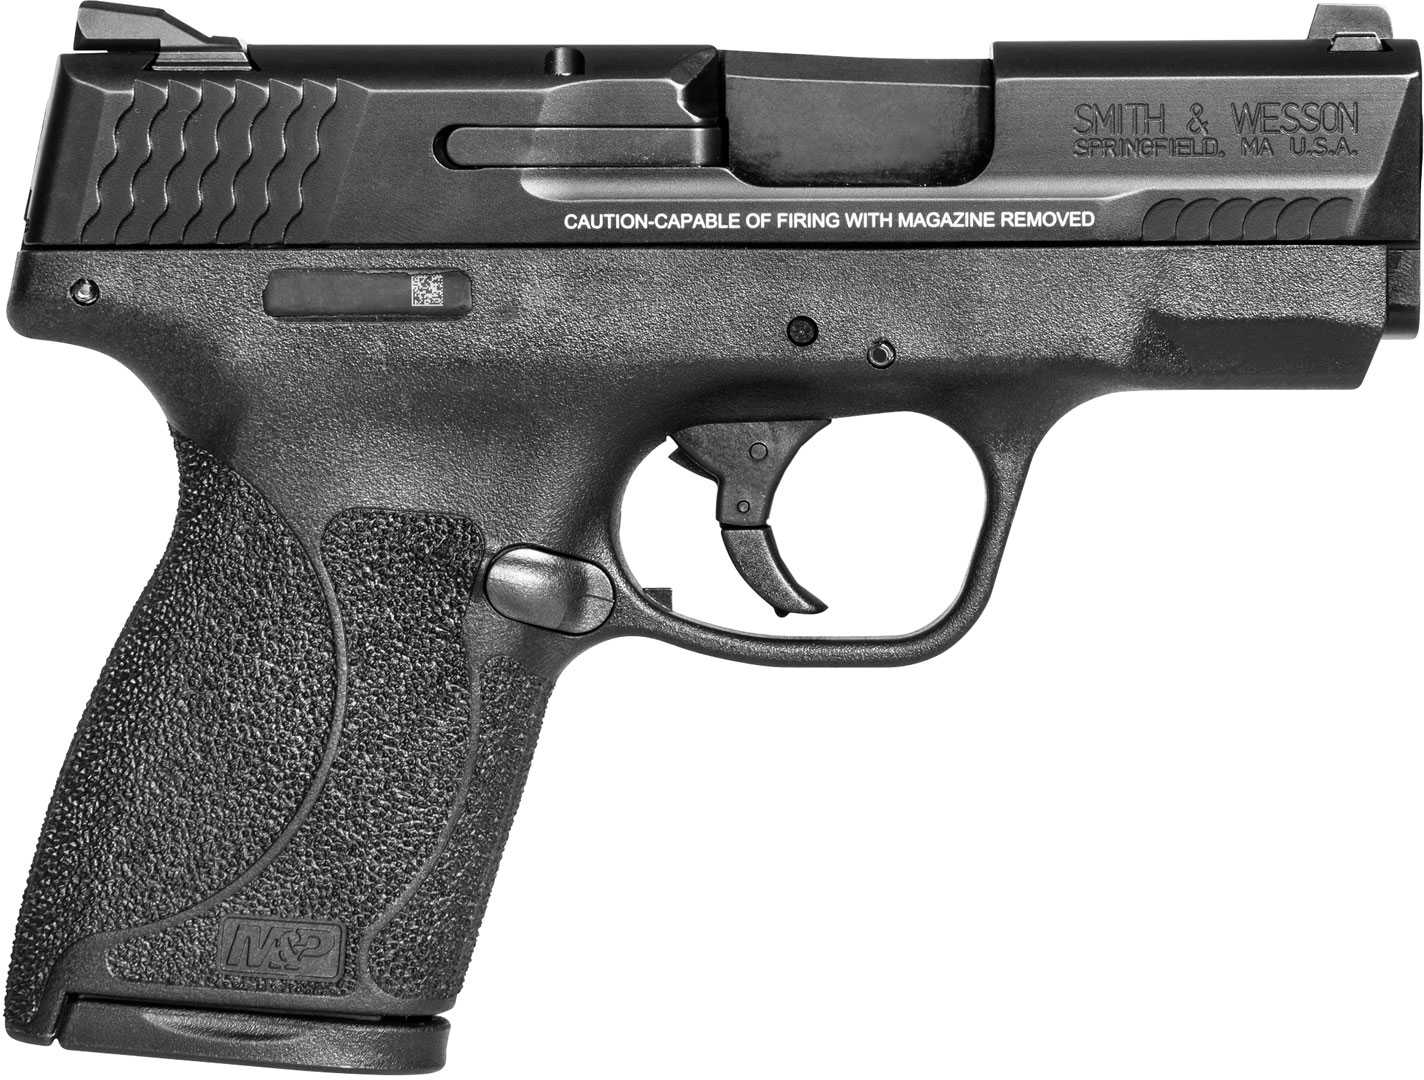 Smith & Wesson M&P 45 Shield 45 ACP Fixed Sights Blackened Finish No Thumb Safety Semi Automatic Pistol